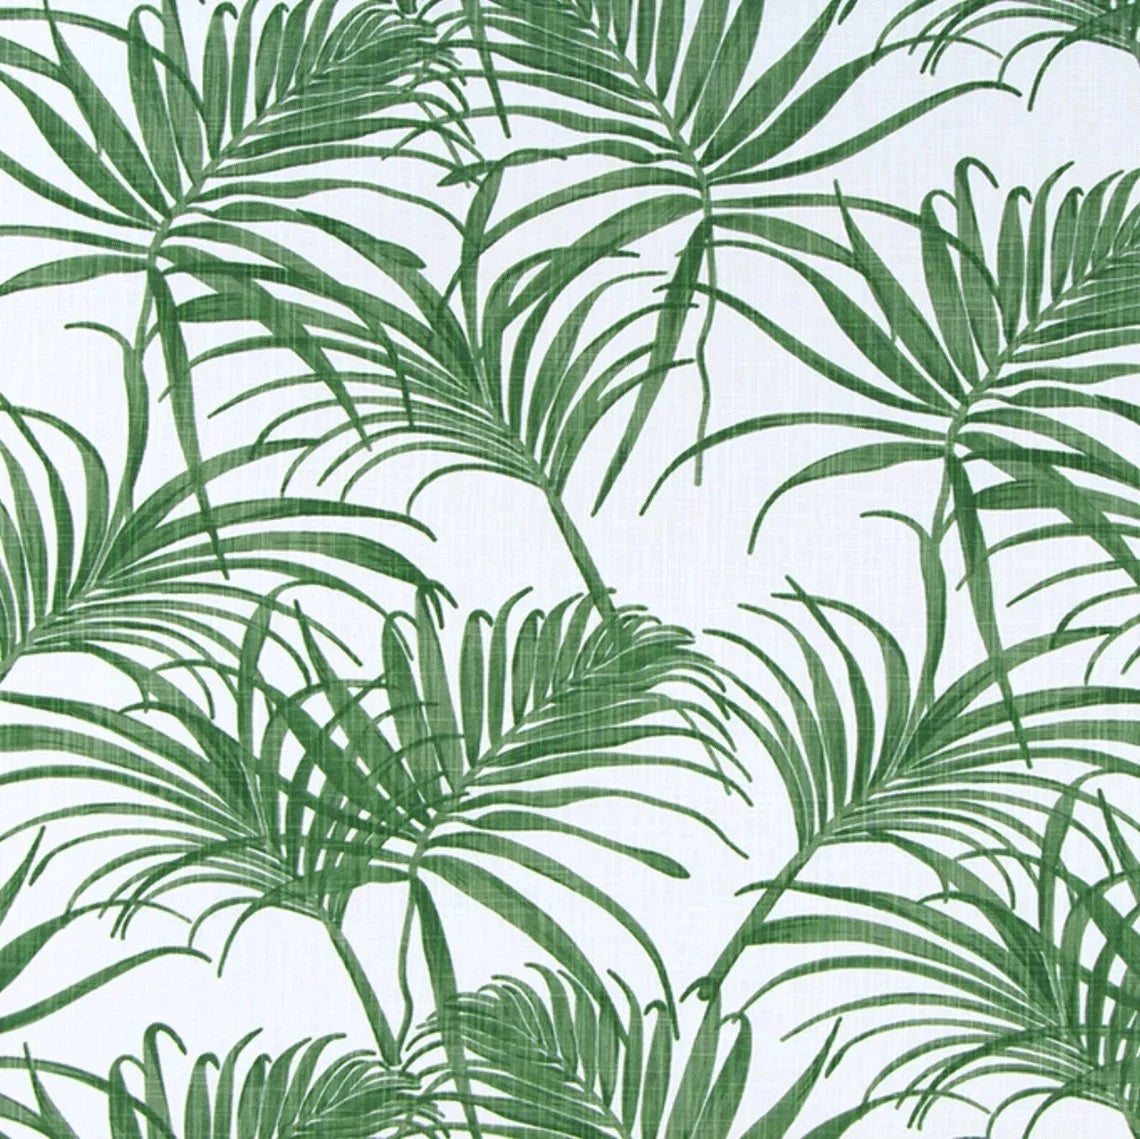 duvet cover in karoo fairway green watercolor tropical foliage